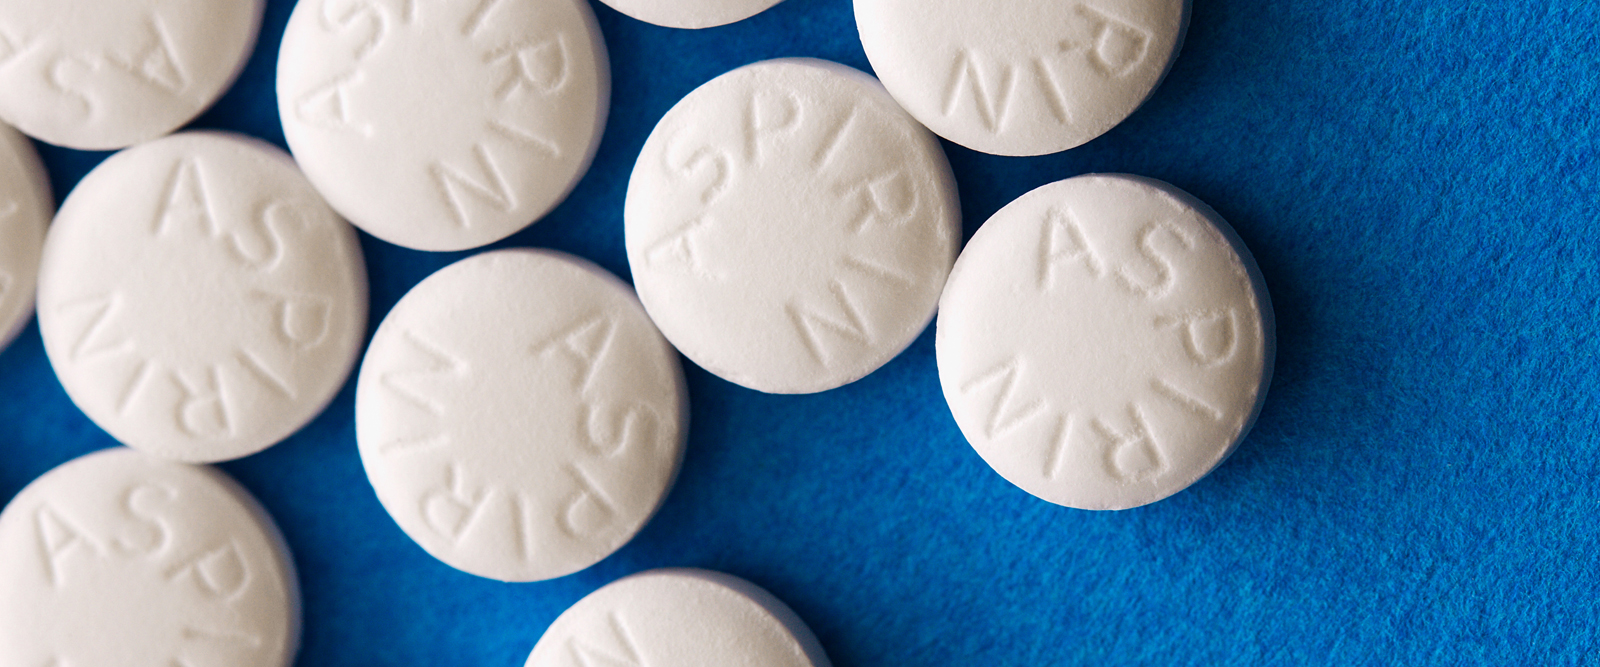 new aspirin guidelines for heart attack prevention